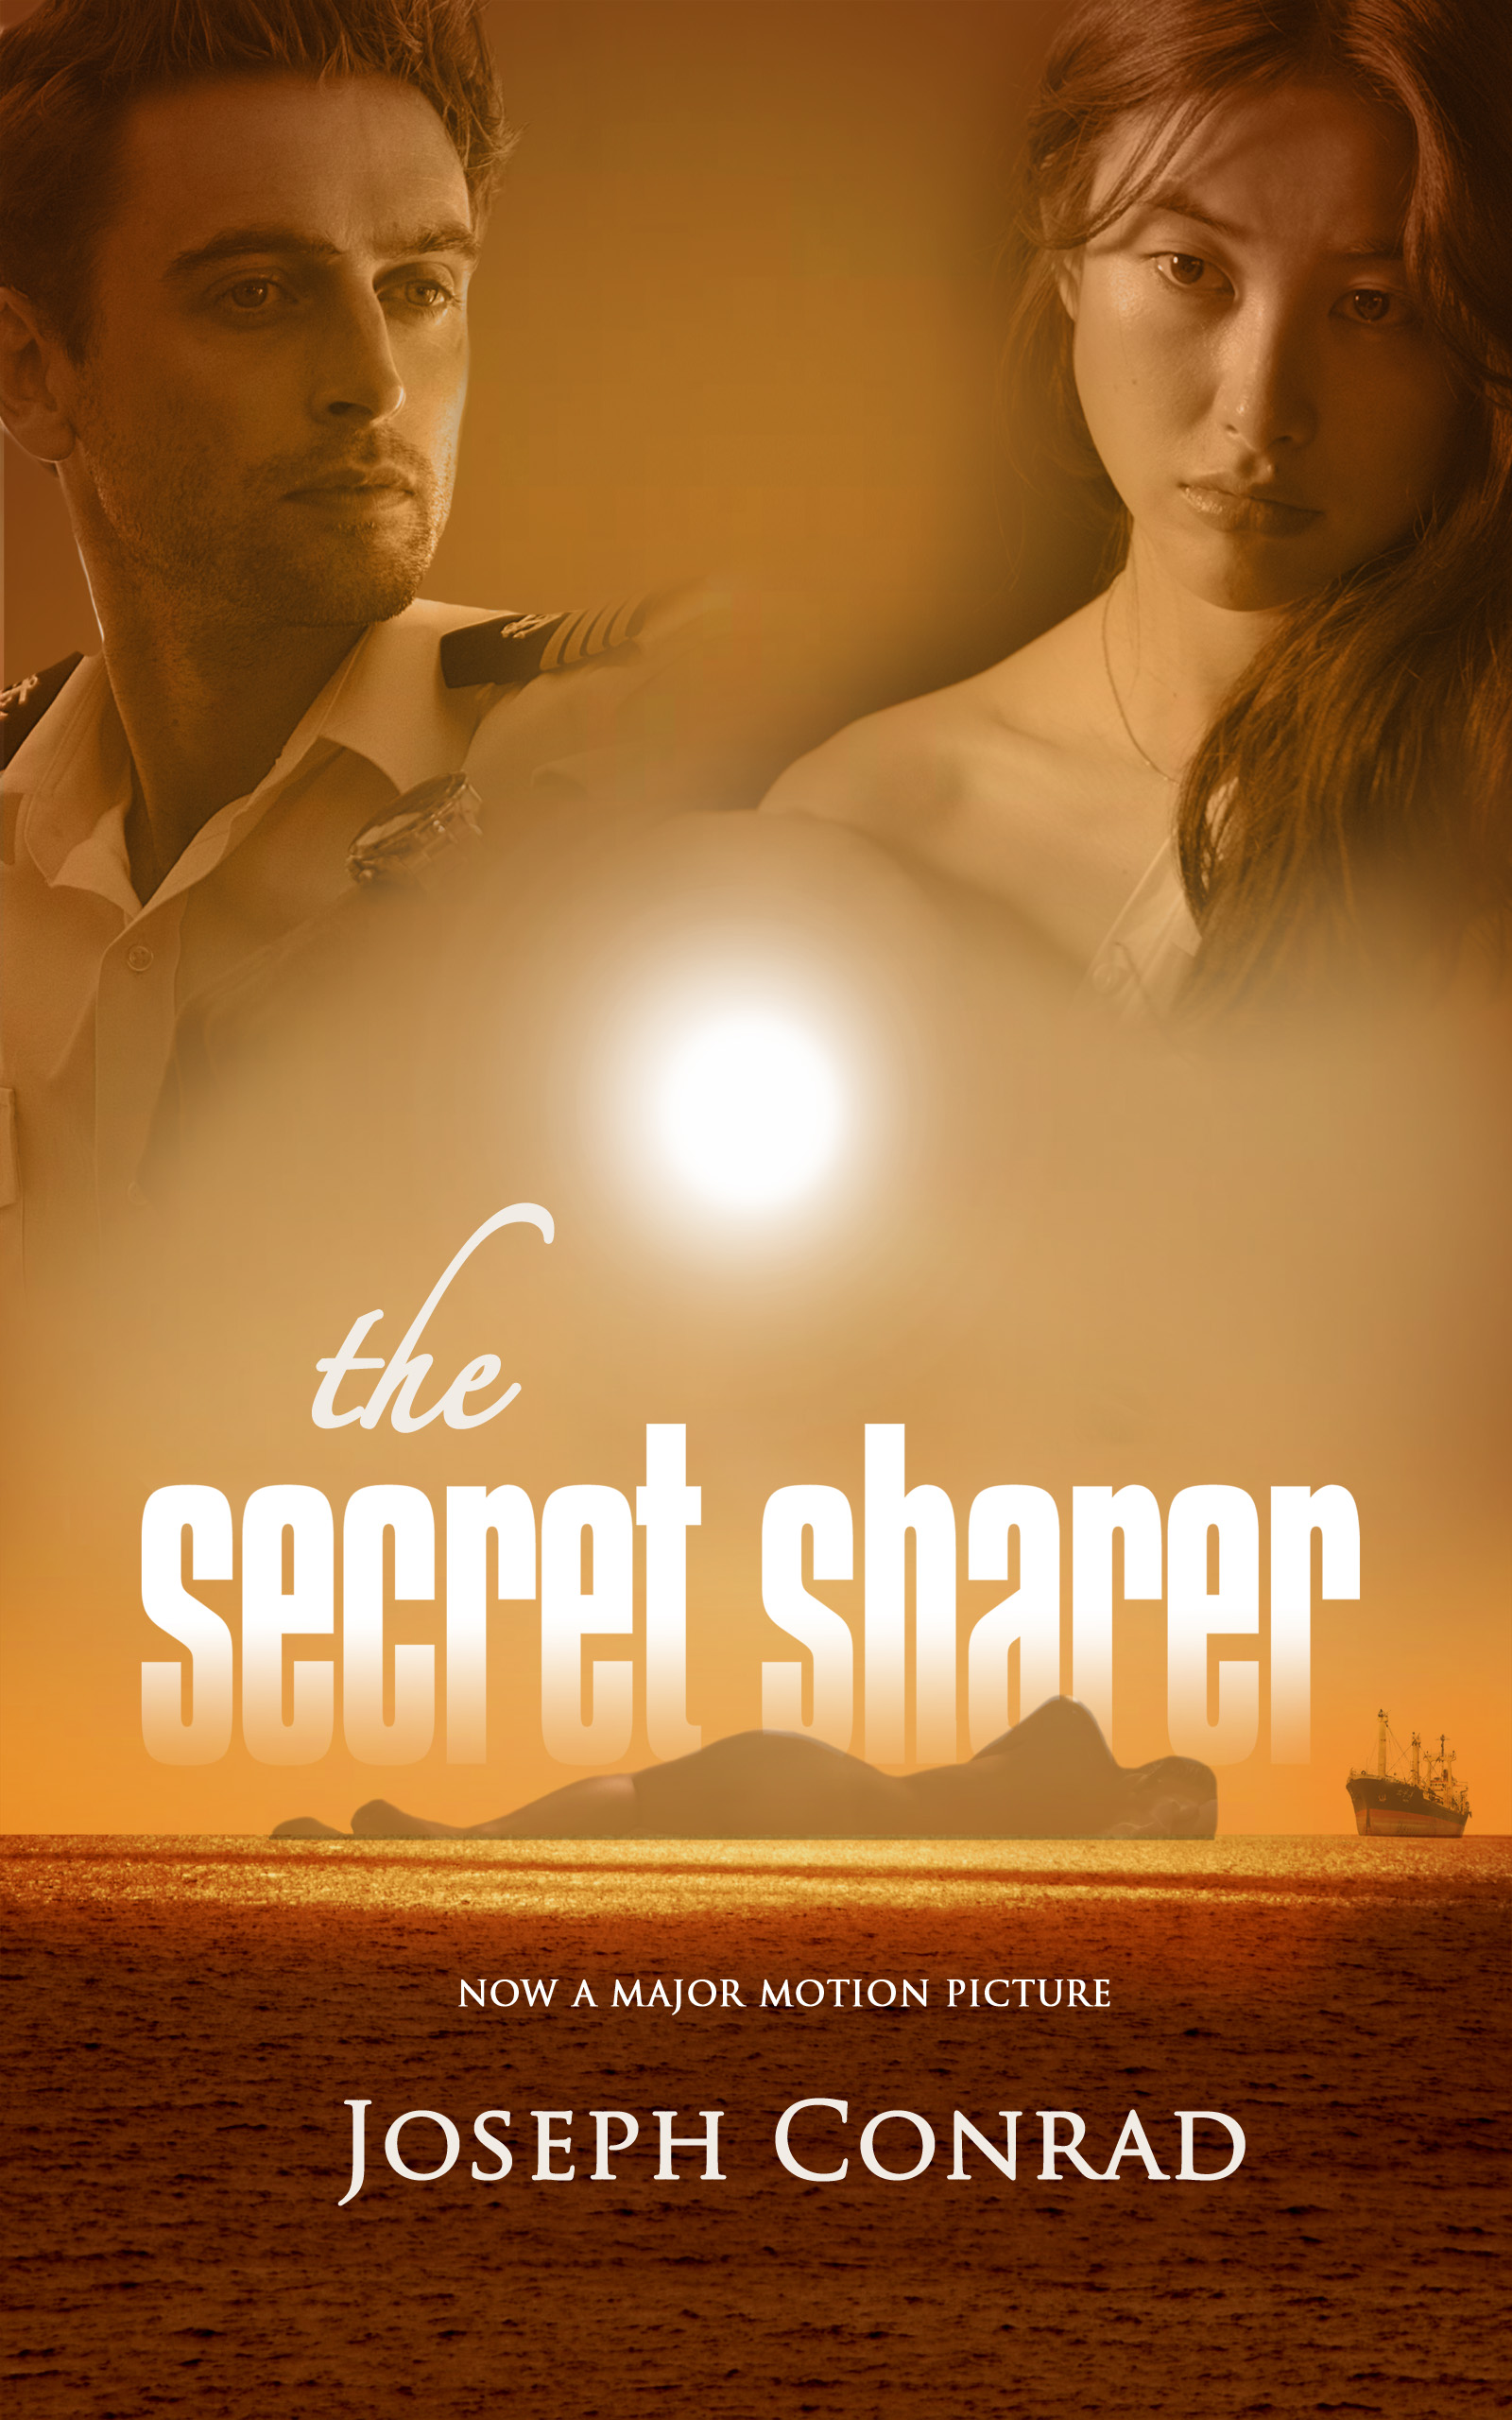 The Secret Sharer and Secret Sharer Screenplay E-book 